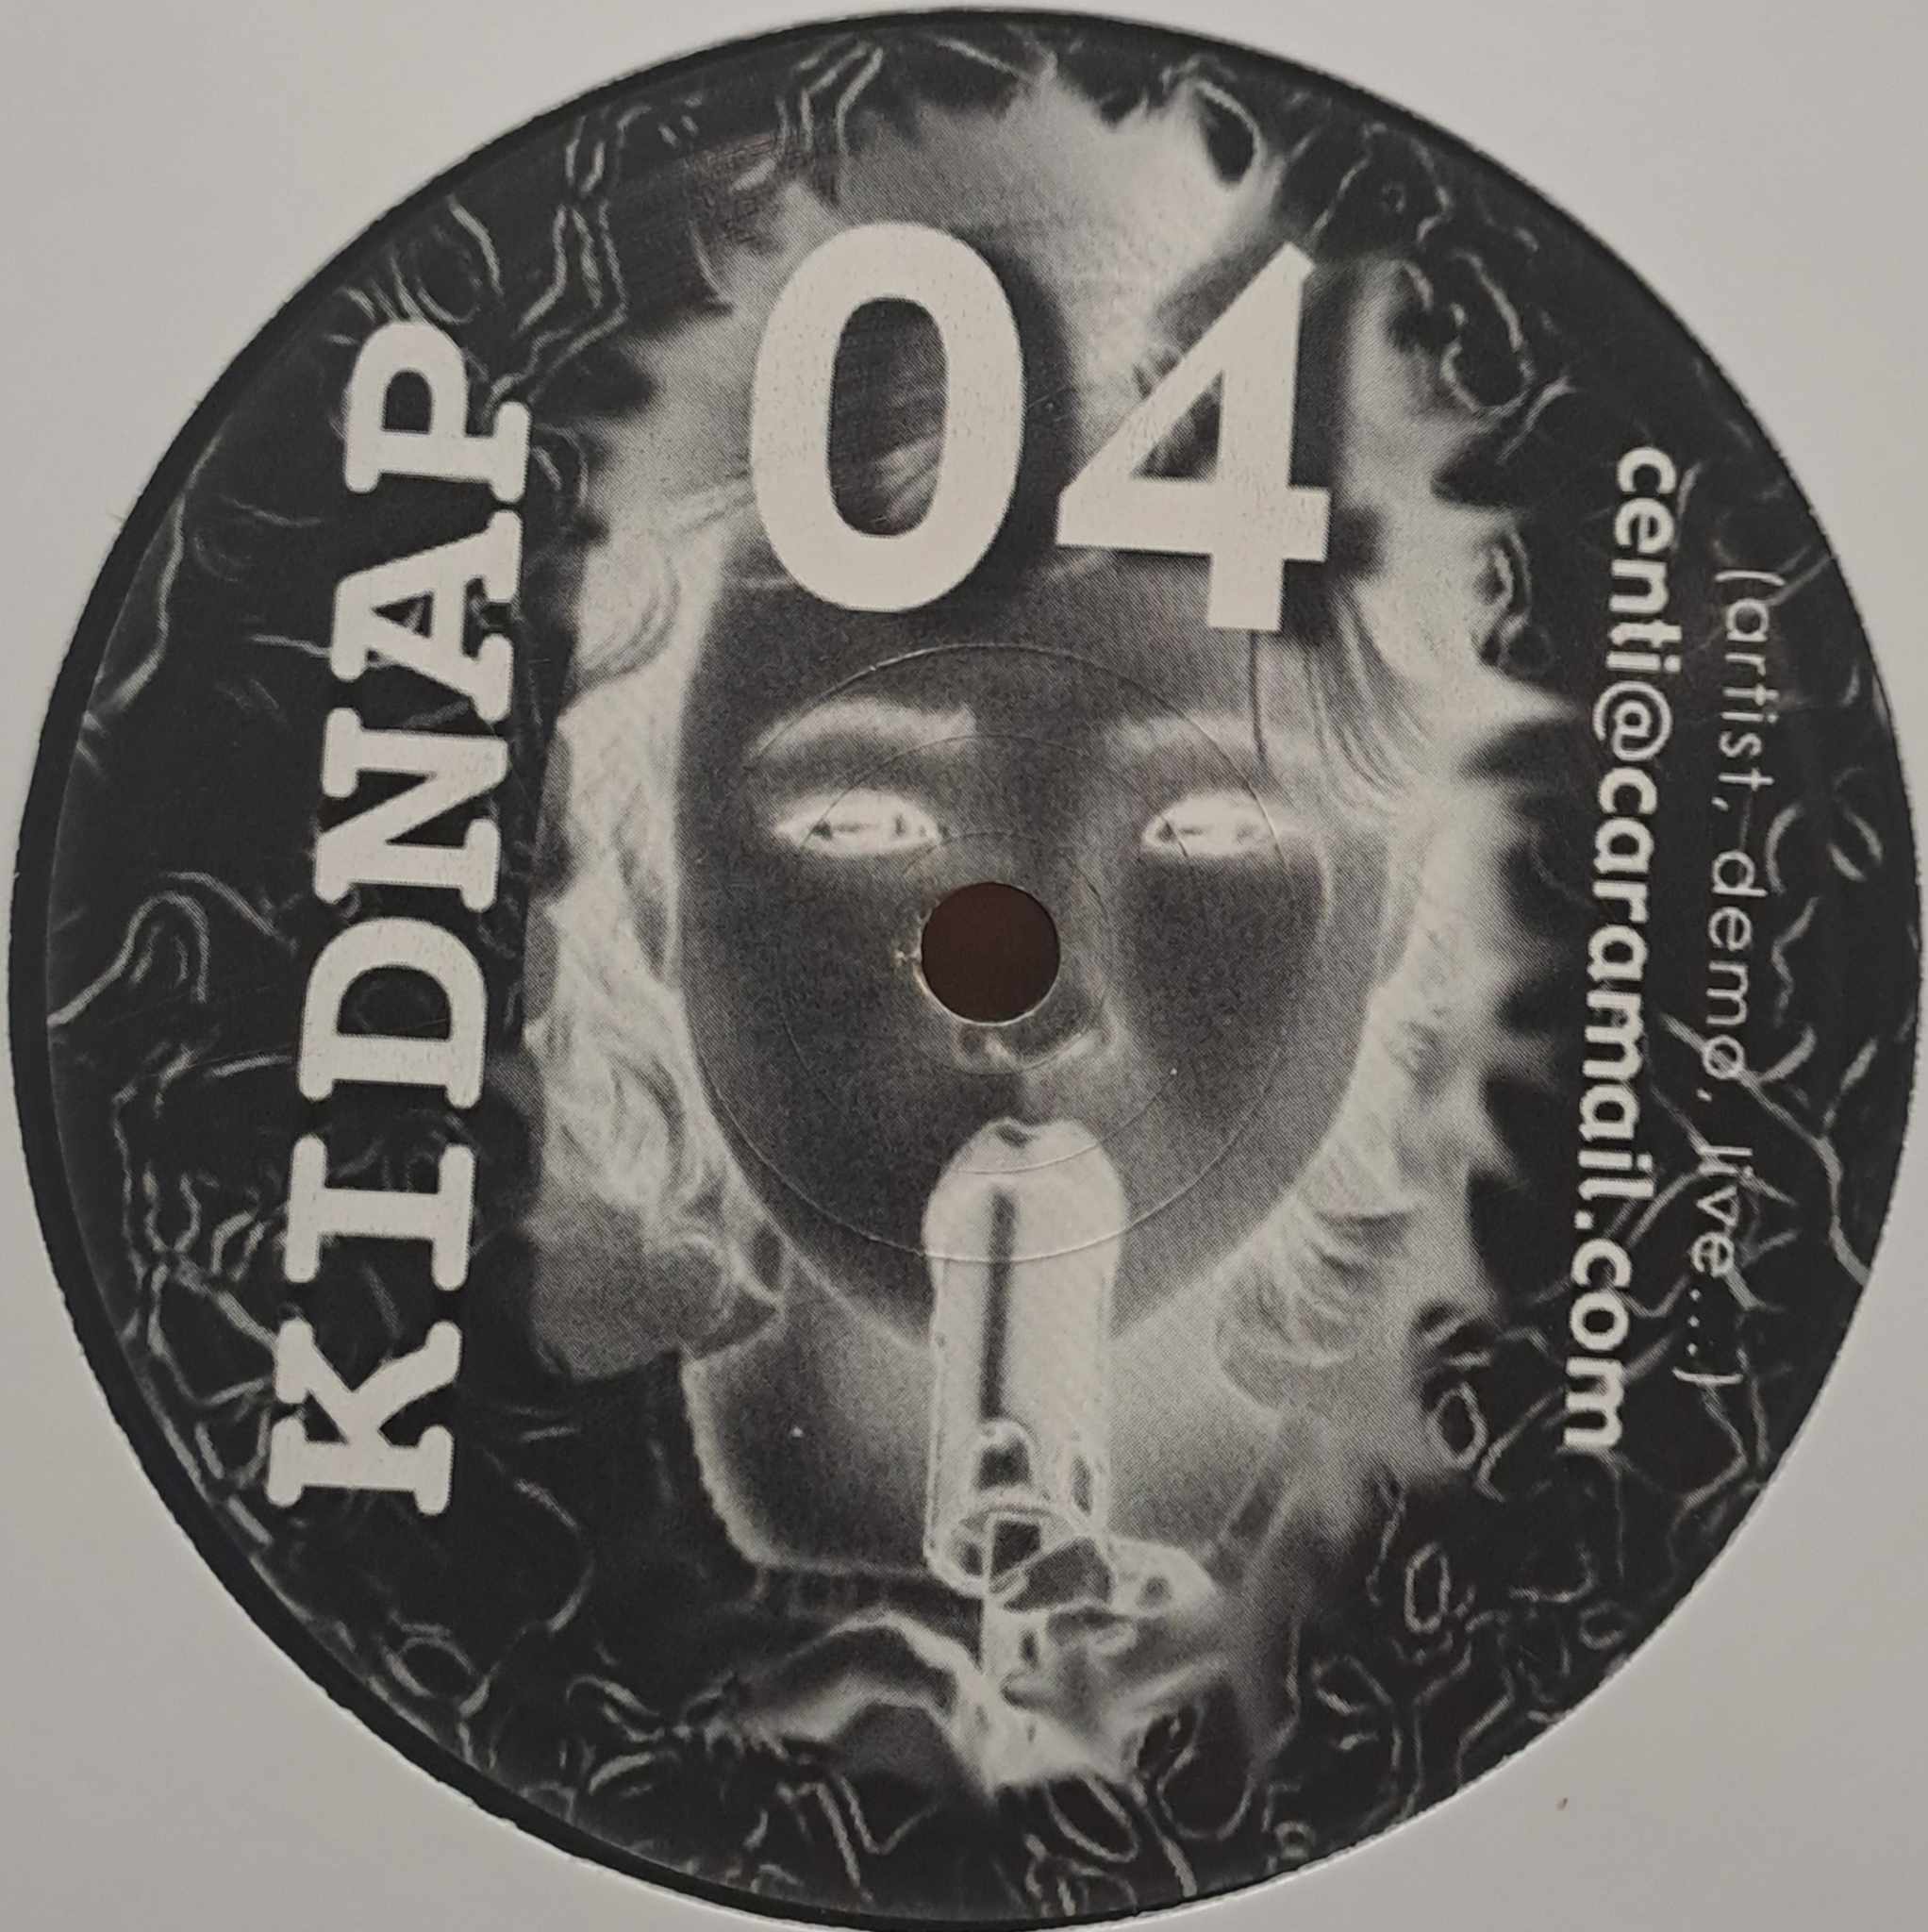 Kidnap 04 - vinyle hardcore